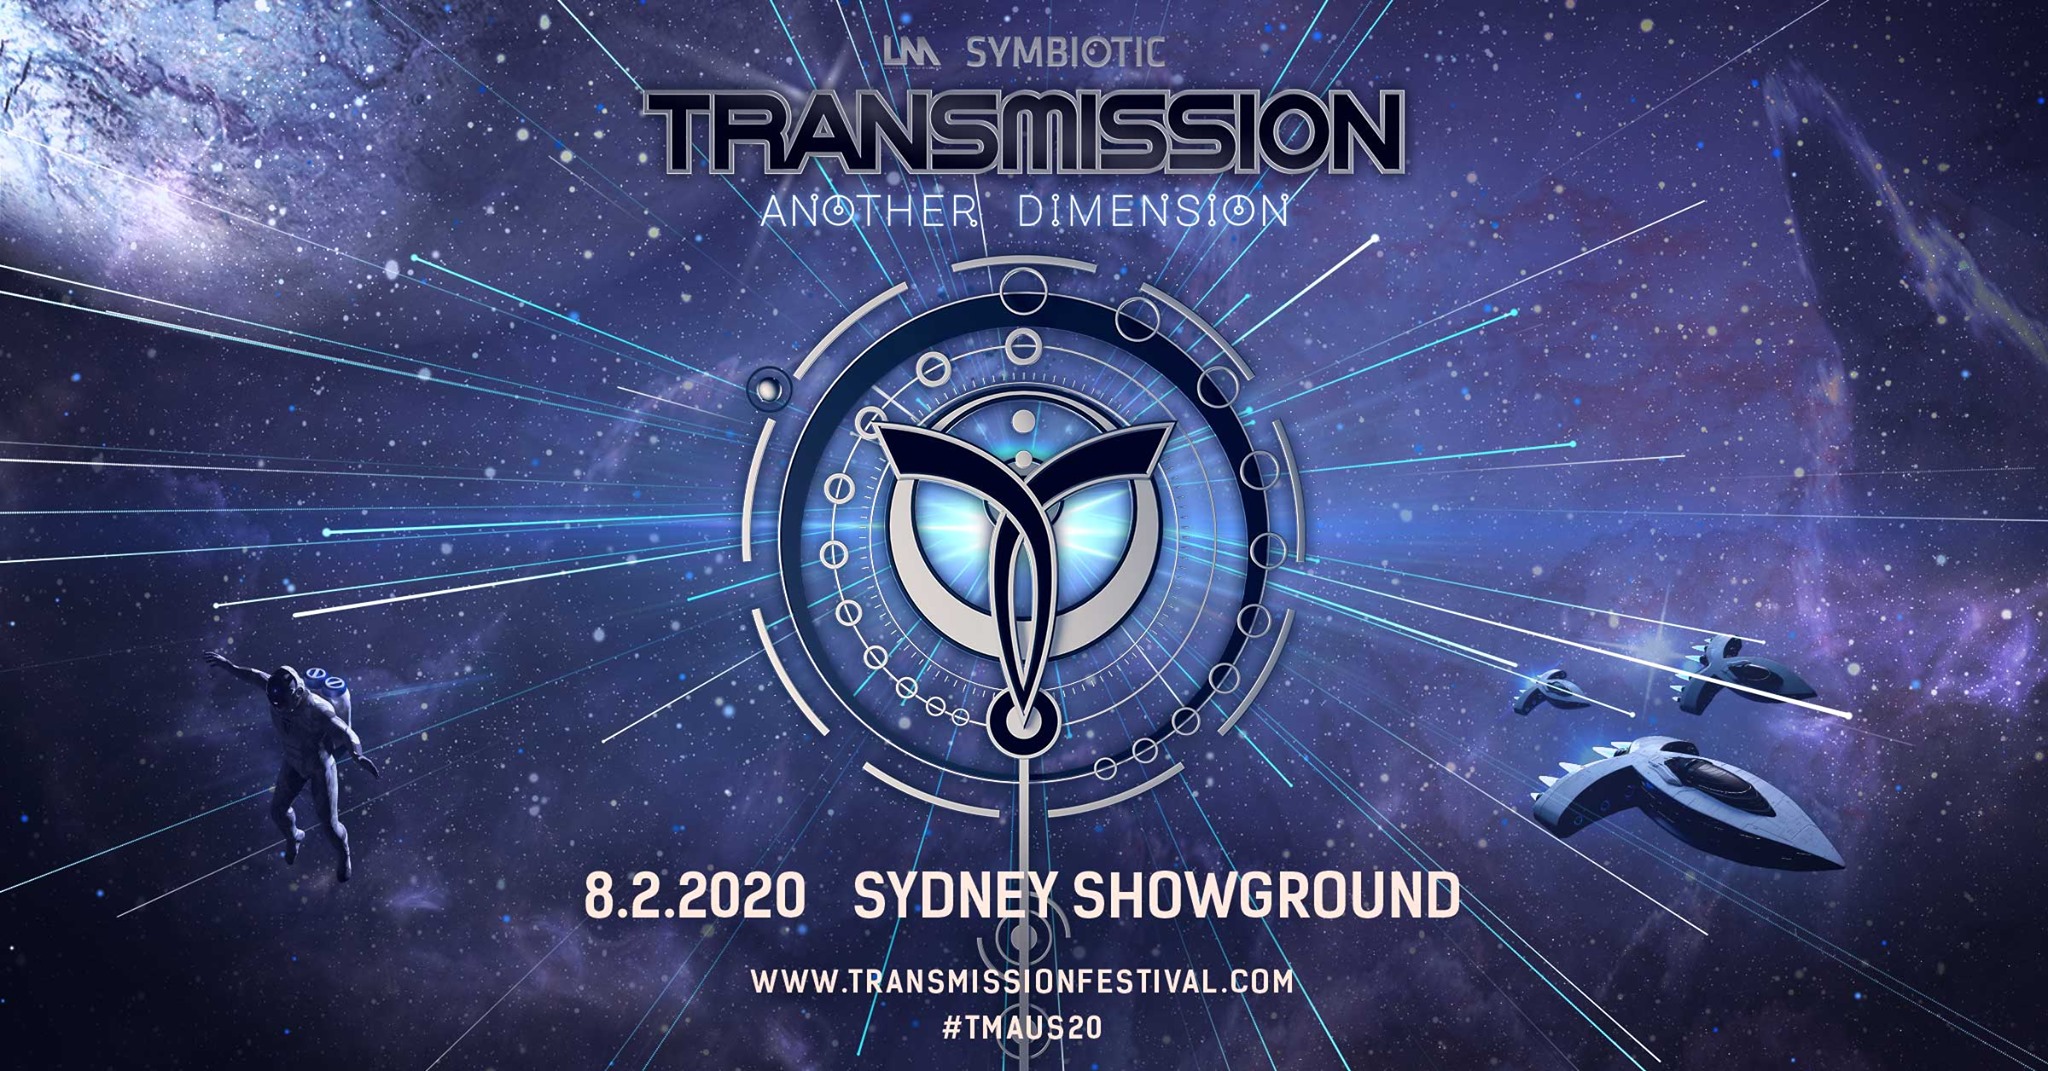 transmission-another-dimension-2020-australia-oz-edm